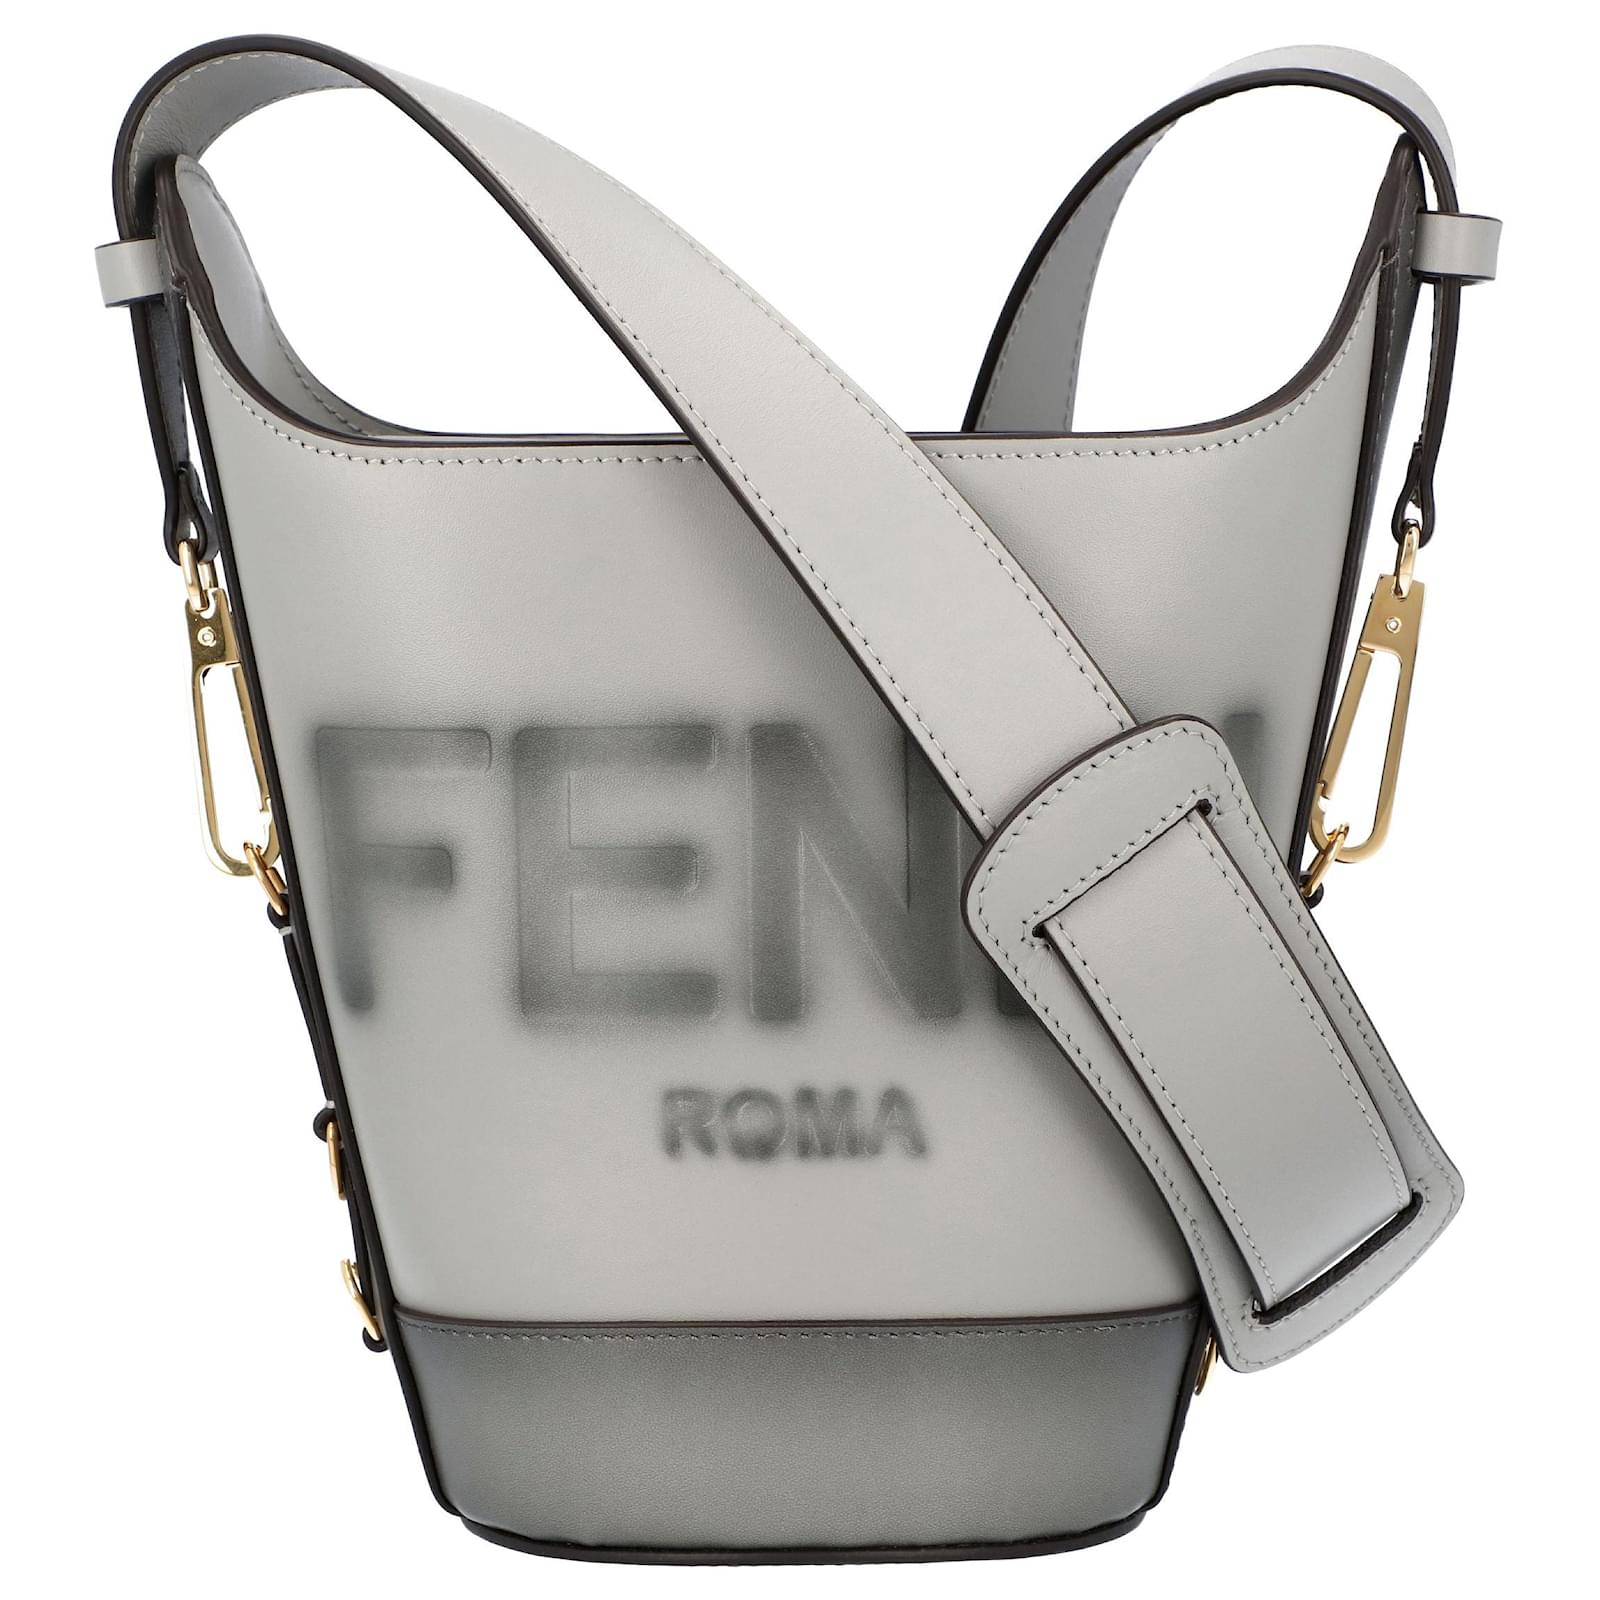 Fendi Logo Bucket Bag  Luxury Fashion Clothing and Accessories